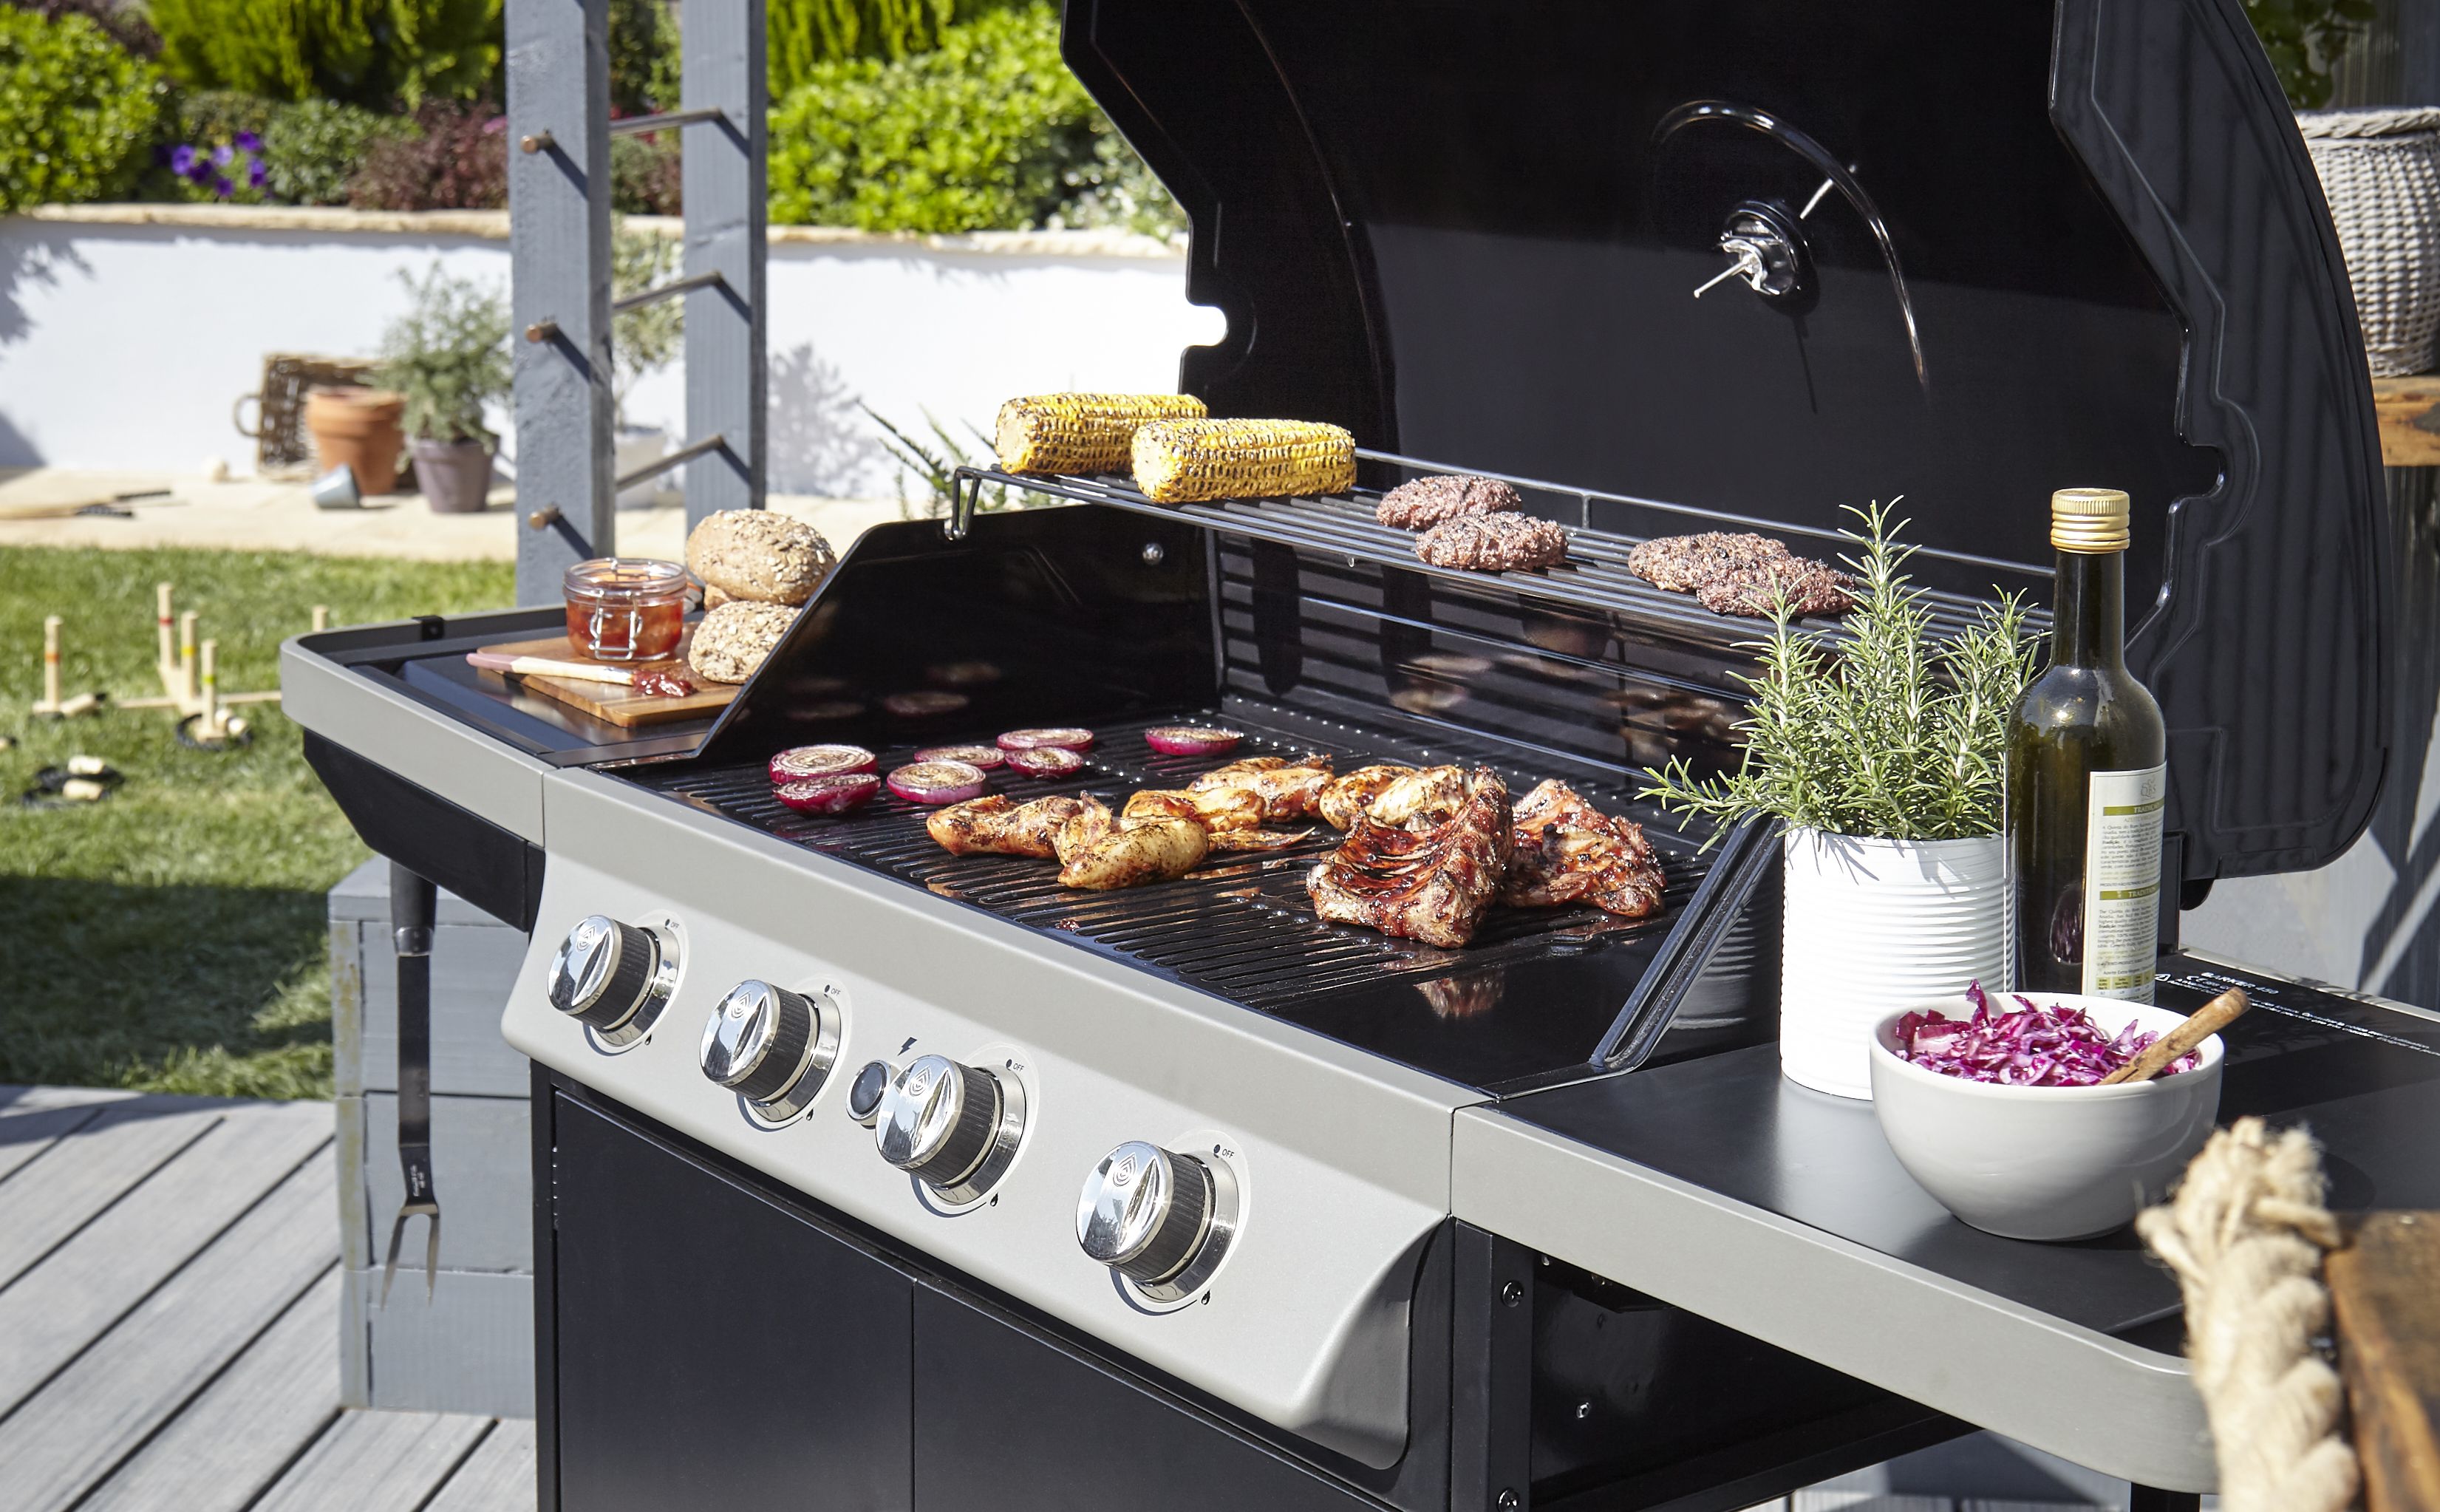 barbecue wallpaper,barbecue,grilling,barbecue grill,outdoor grill,outdoor grill rack & topper